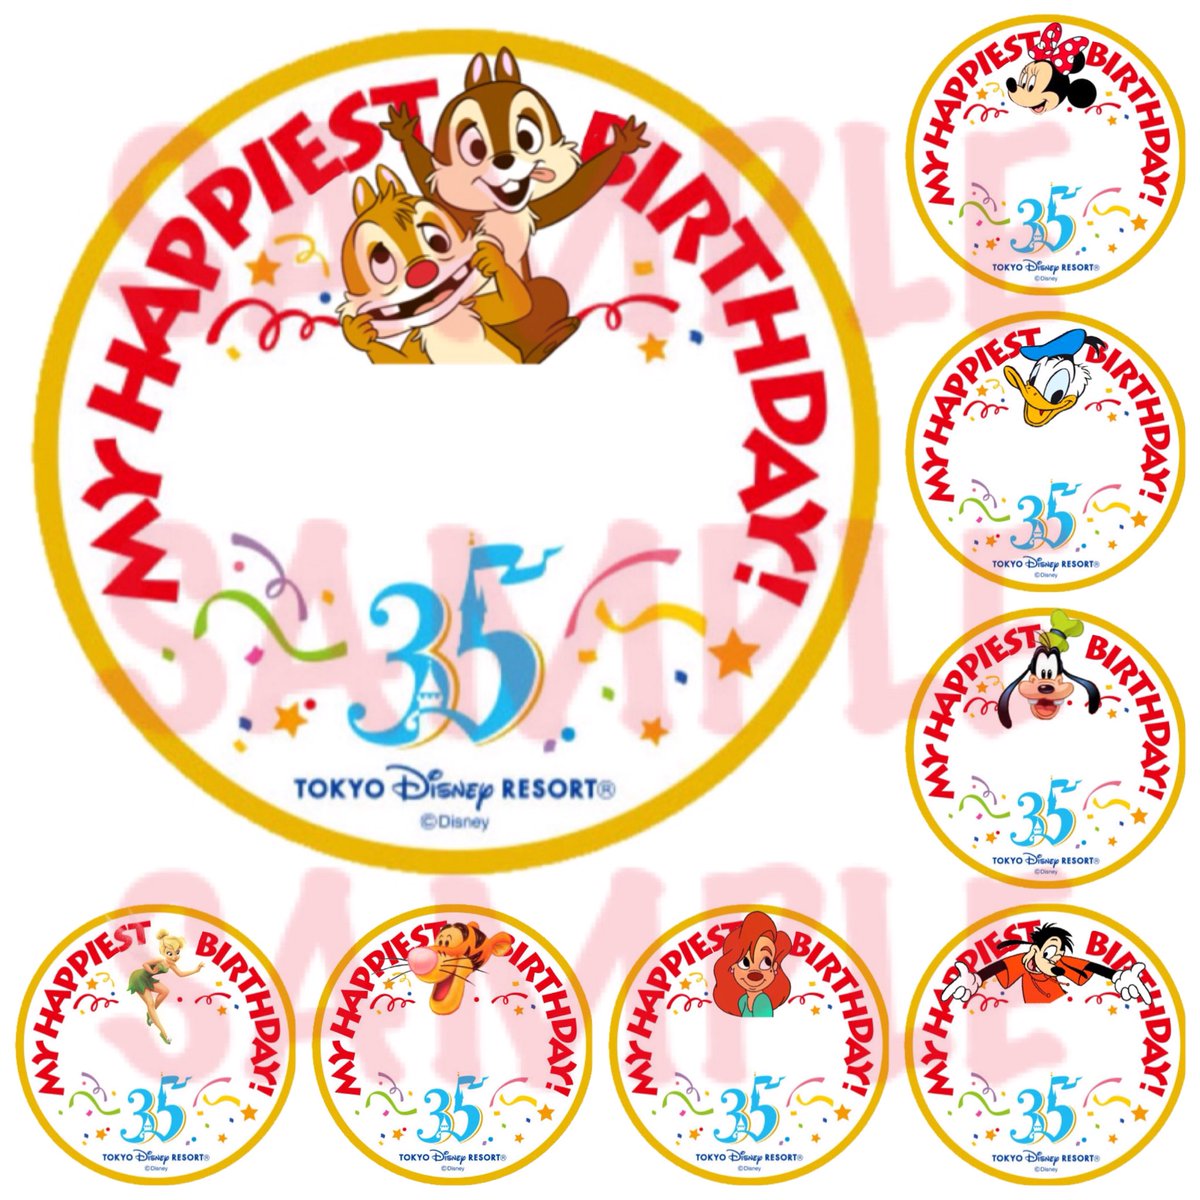 Kay 自分の誕生日まであと3日だから お遊び半分でいっぱい作った 35周年バージョン ディズニー バースデーシール Disney Birthday Stickers